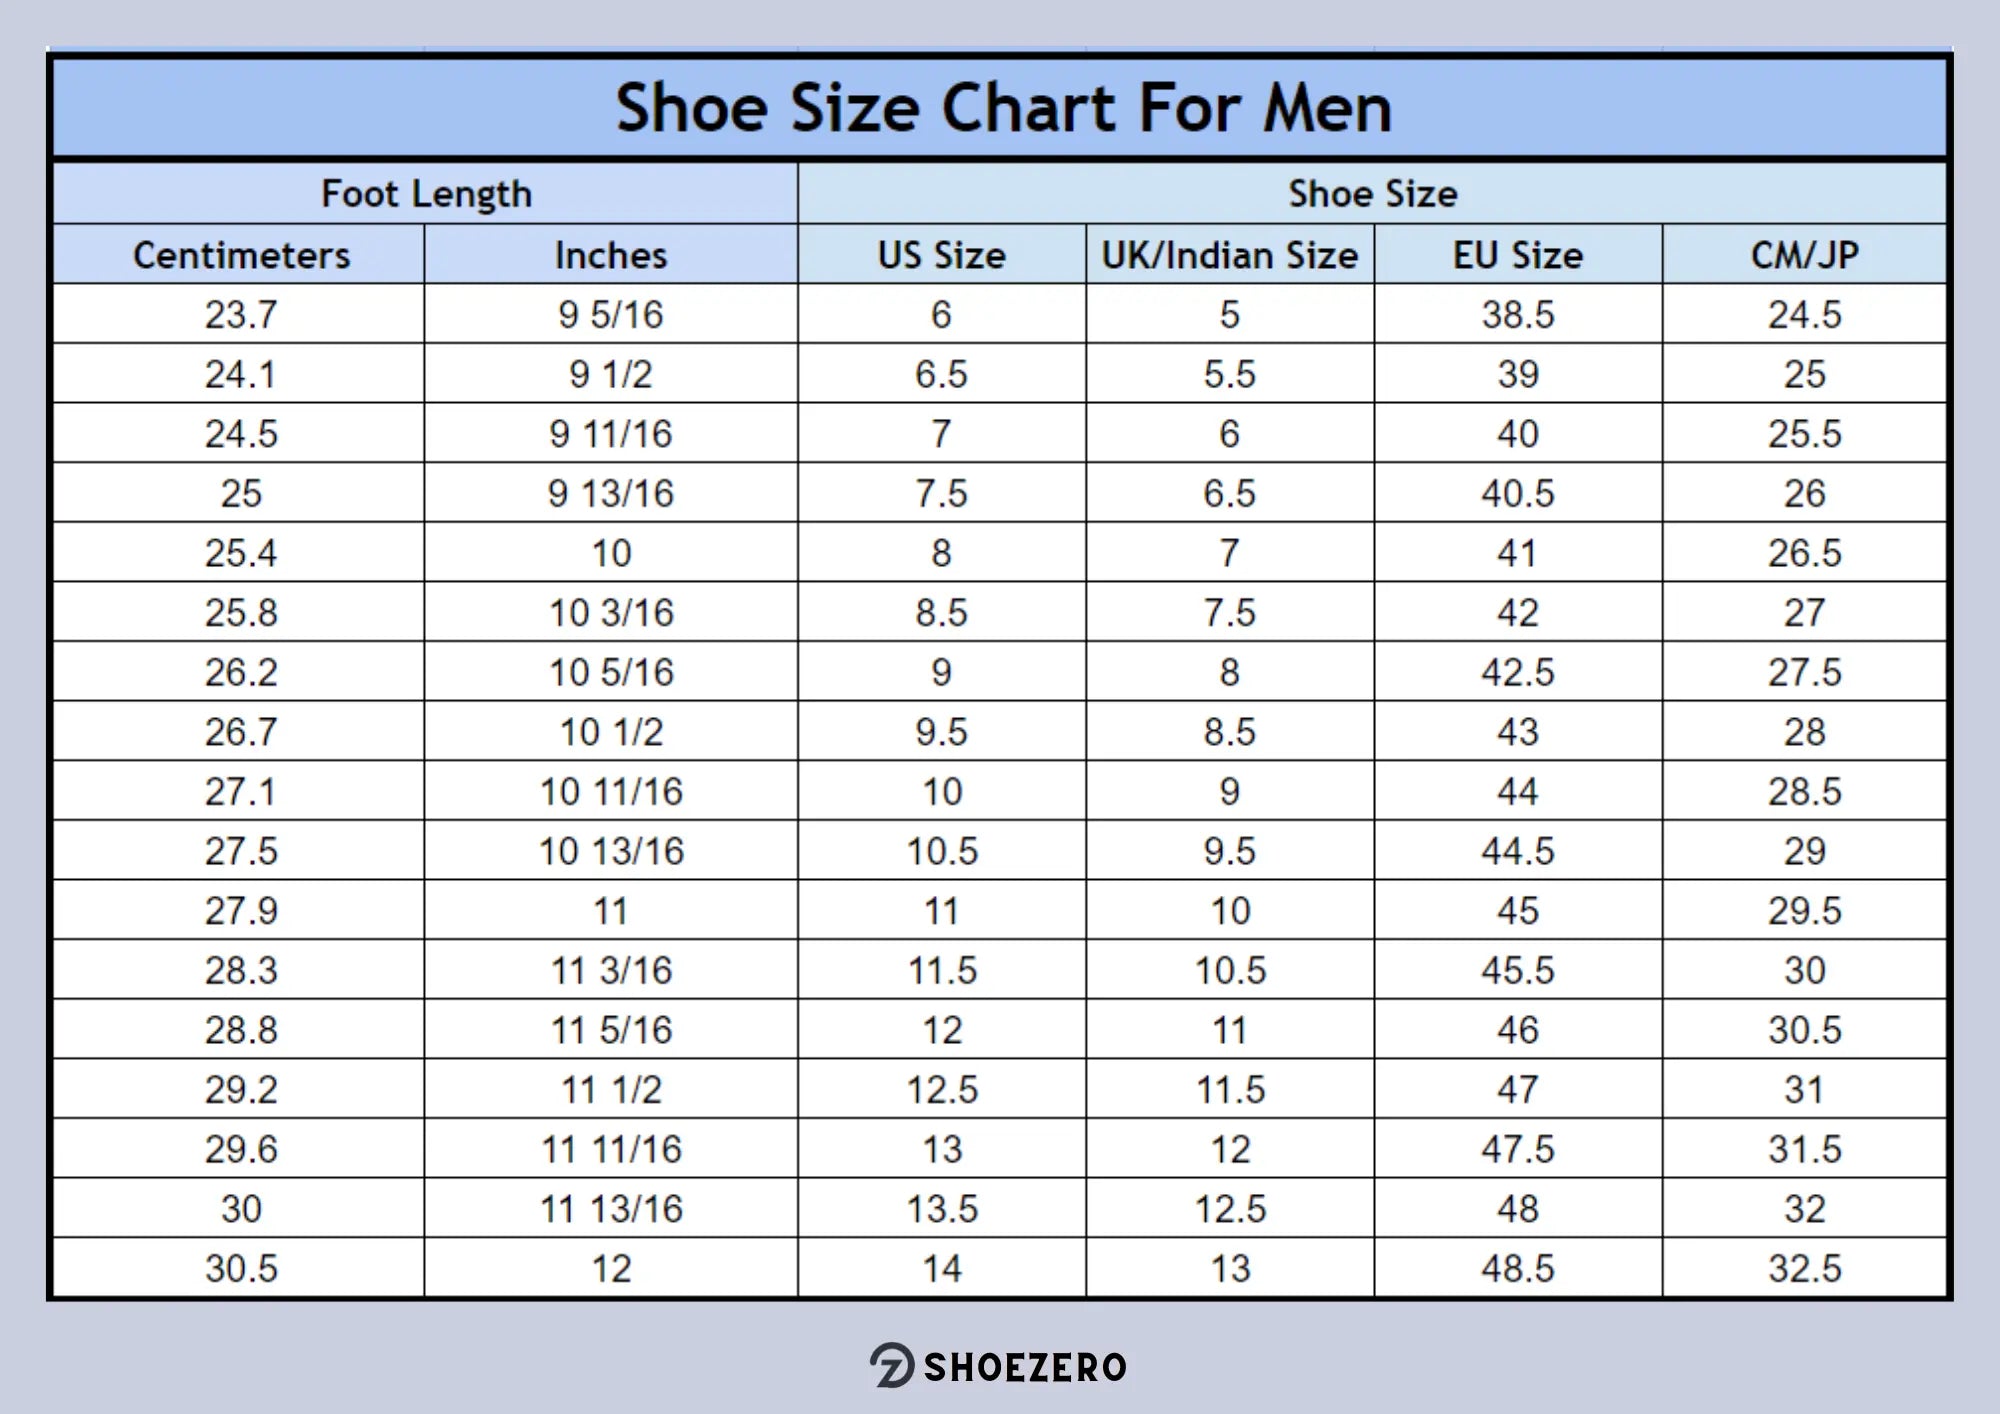 Shoe size chart for men